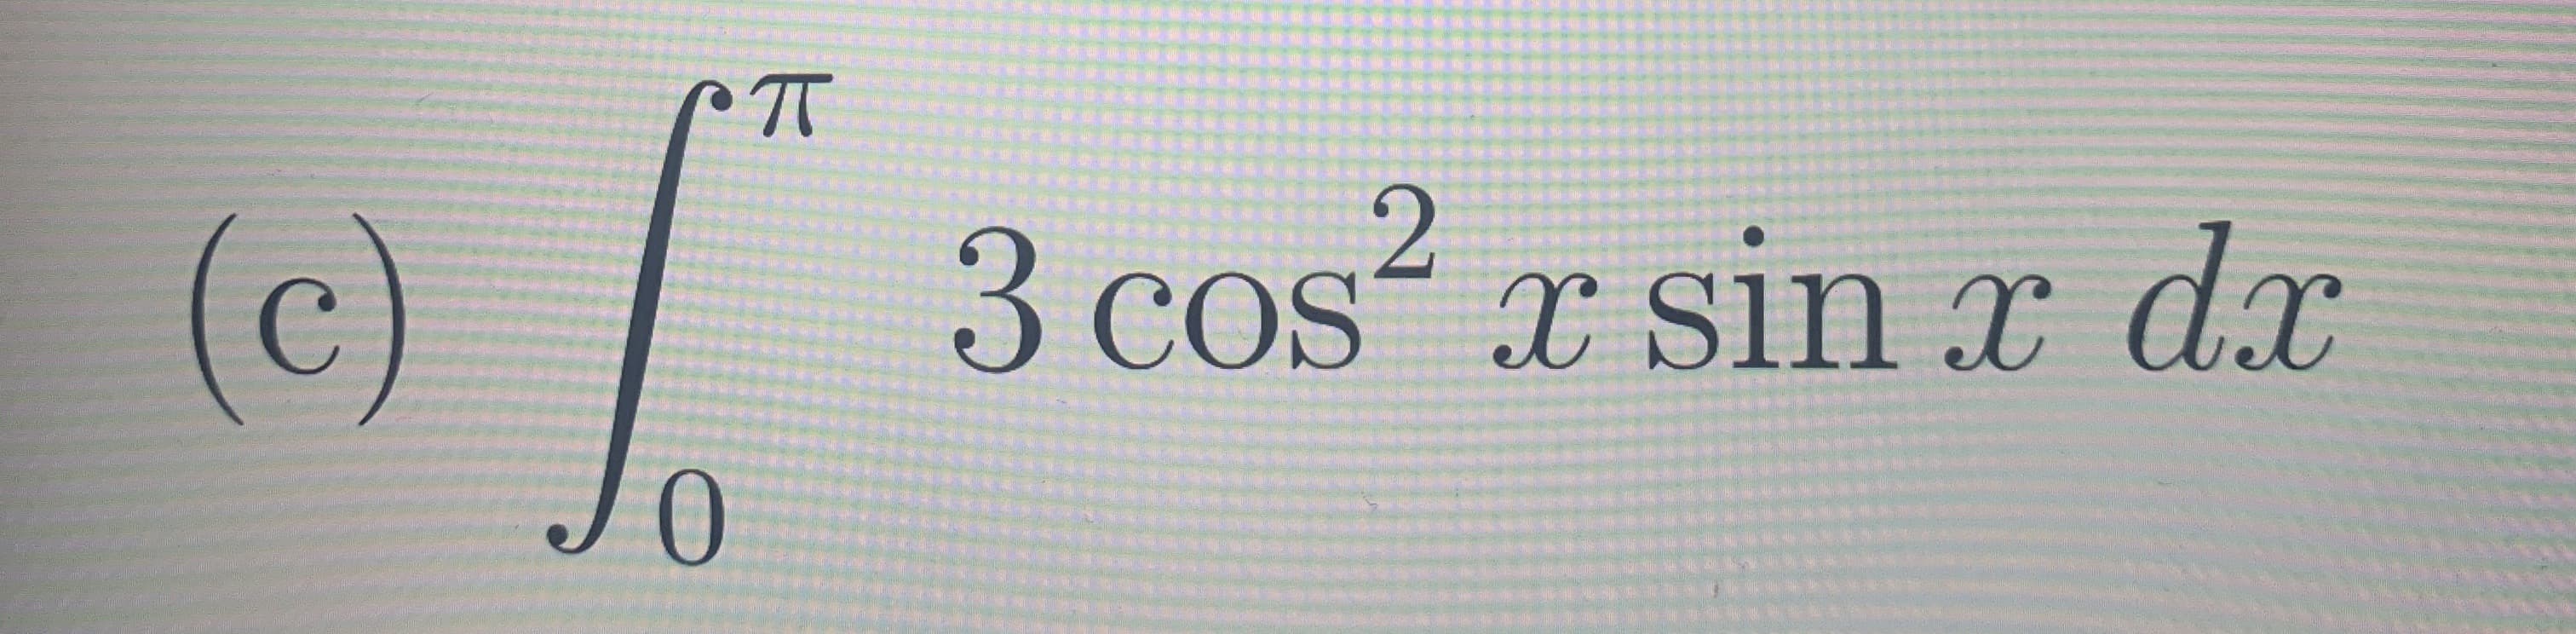 3 cos2 x sin T dx
(c)
